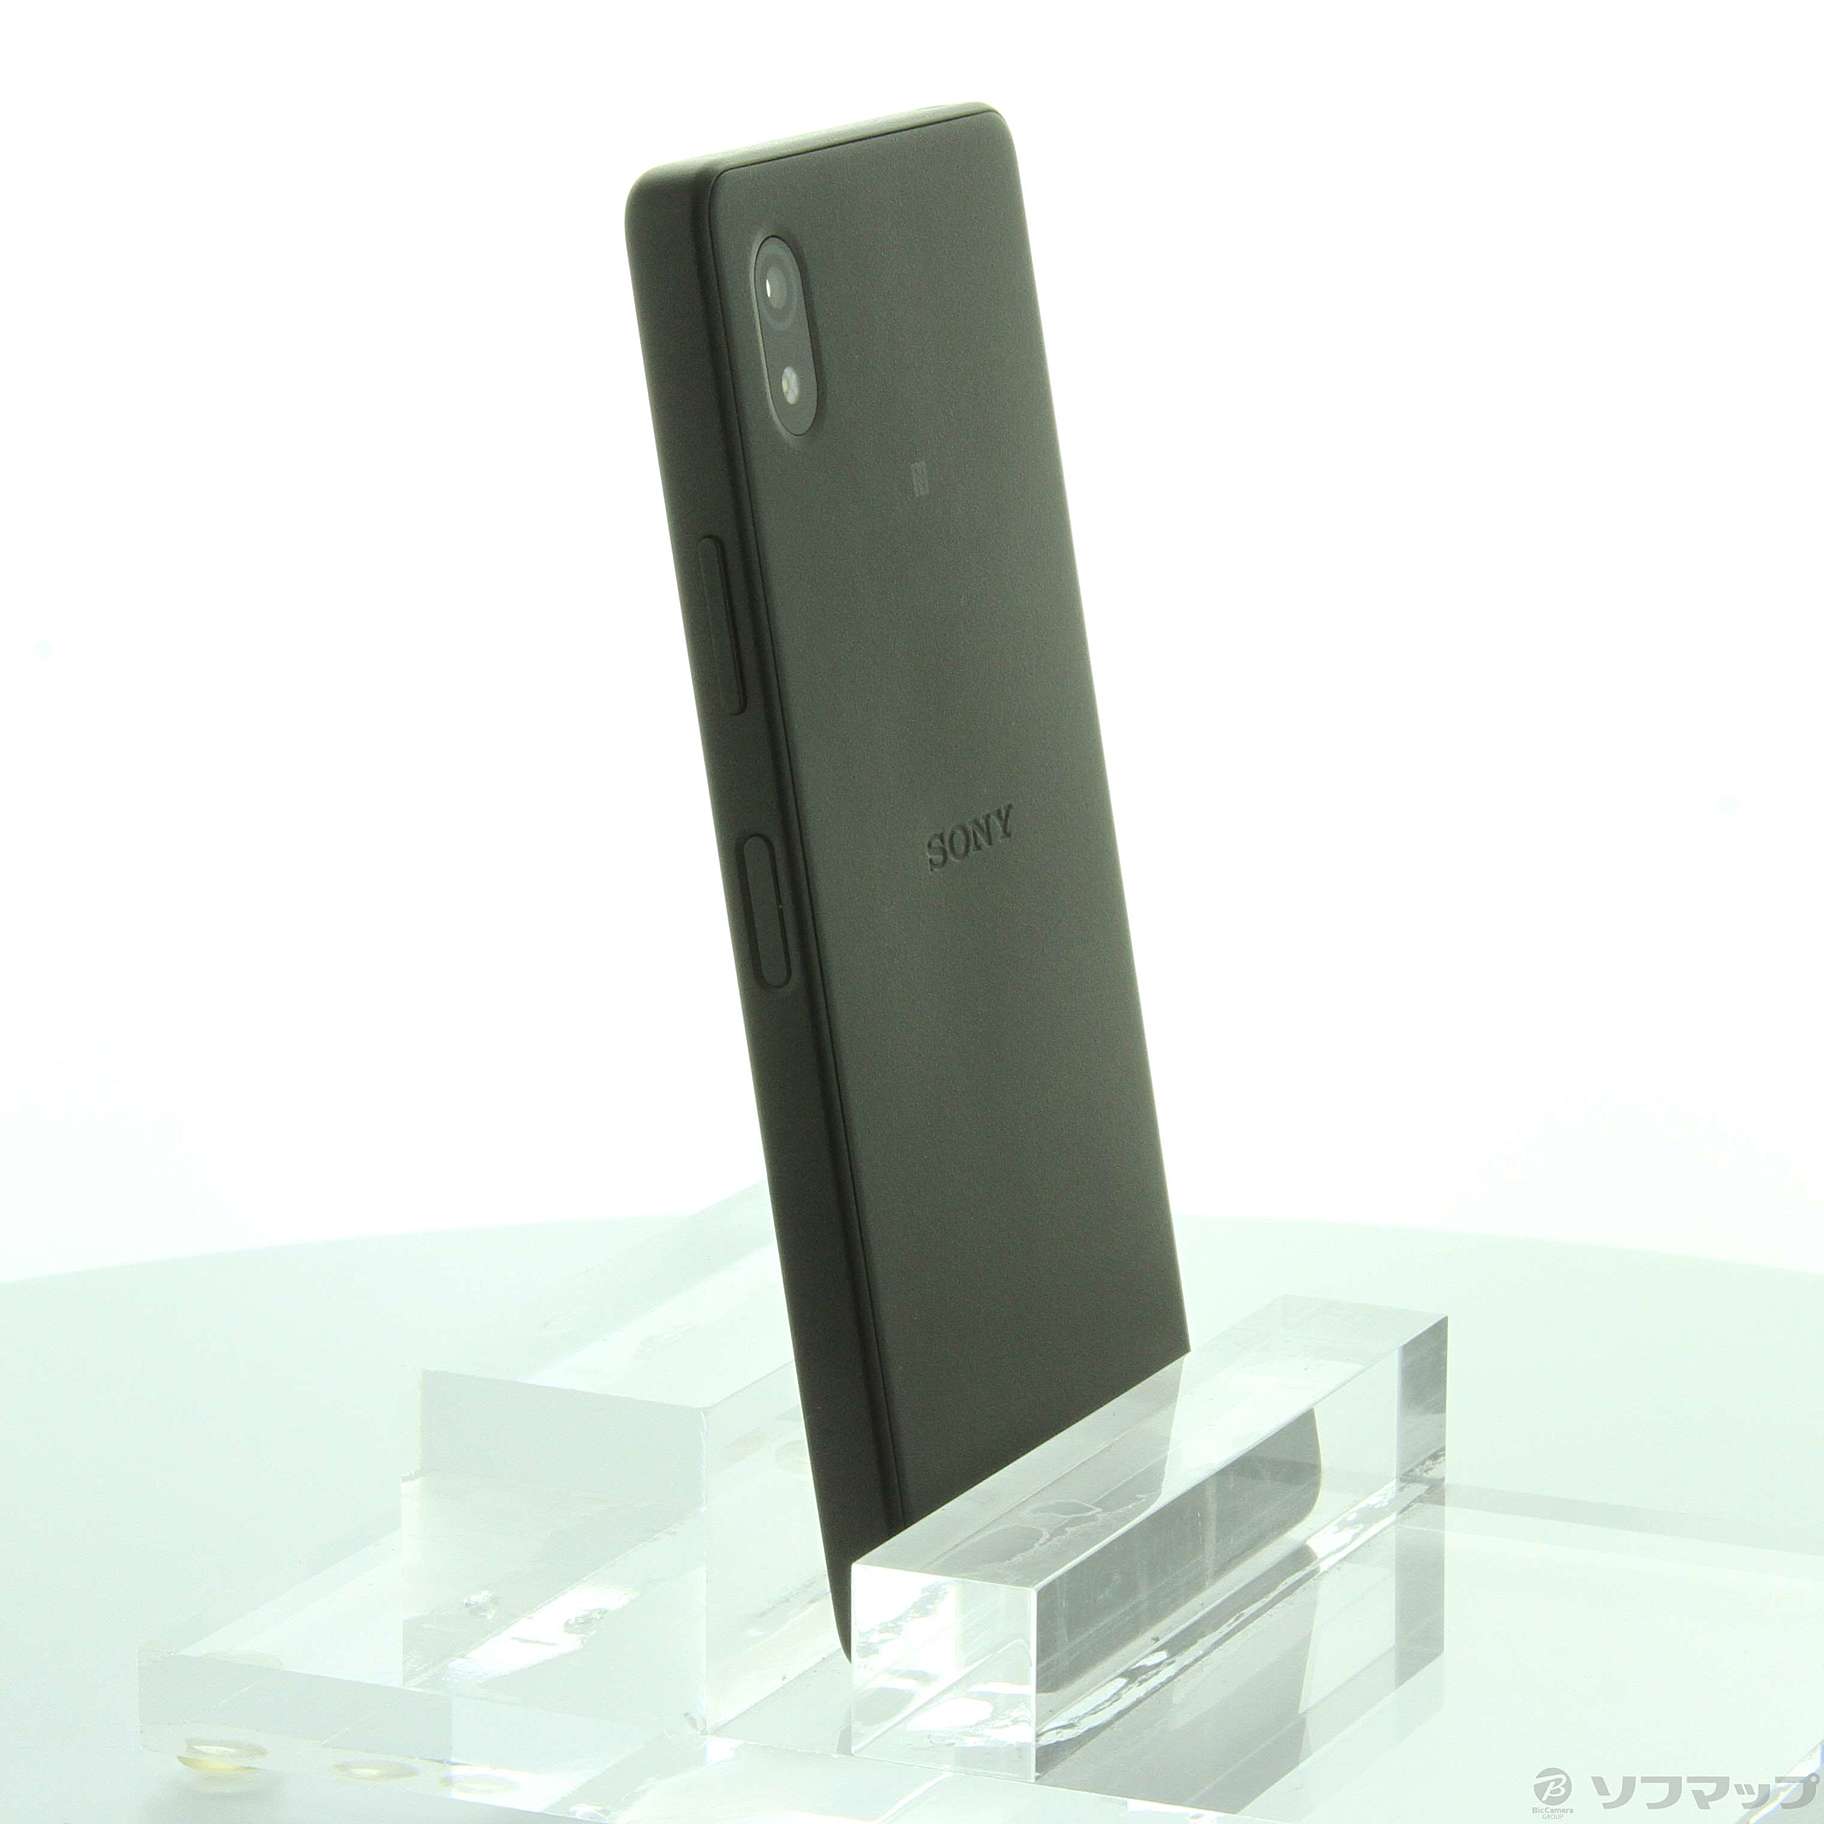 Xperia Ace III ブラック 64GB ワイモバイル - スマートフォン本体